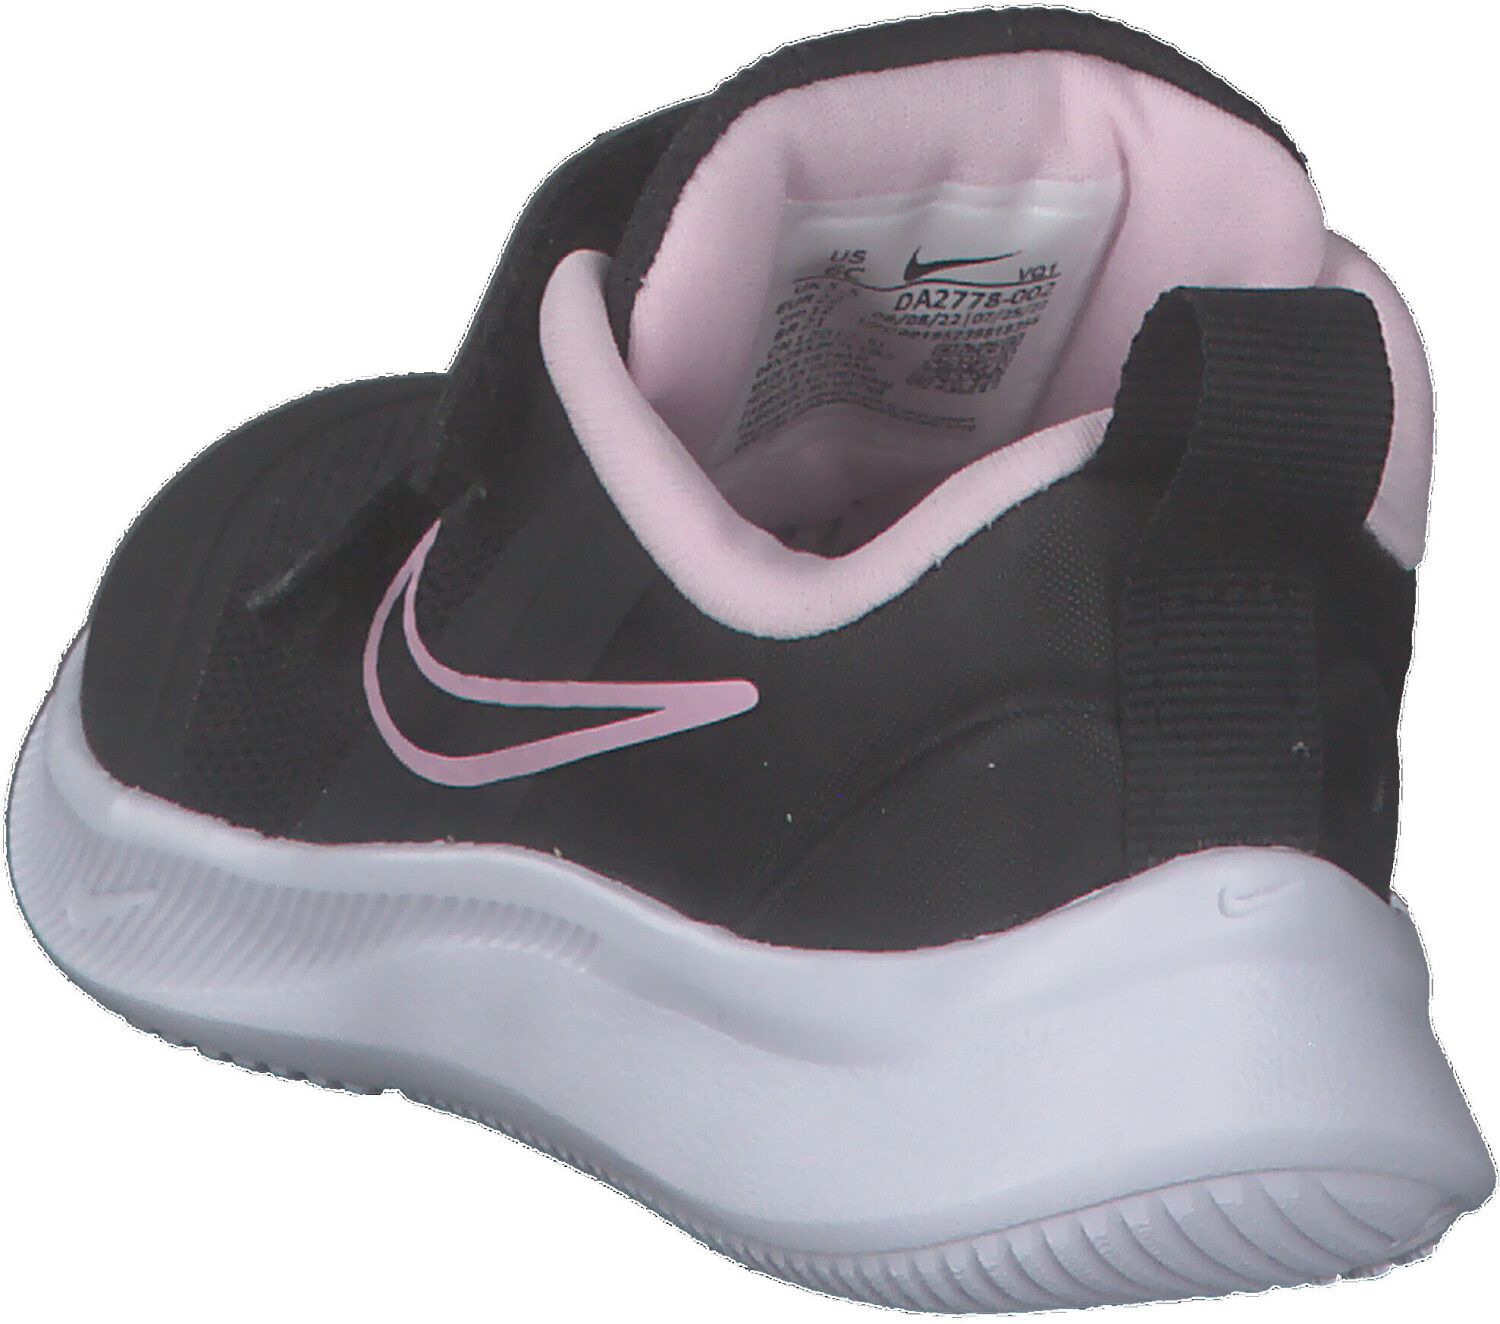 Nike Star Runner 3 (Baby) ab 17,30 foam | black/dark € grey/pink smoke bei Preisvergleich